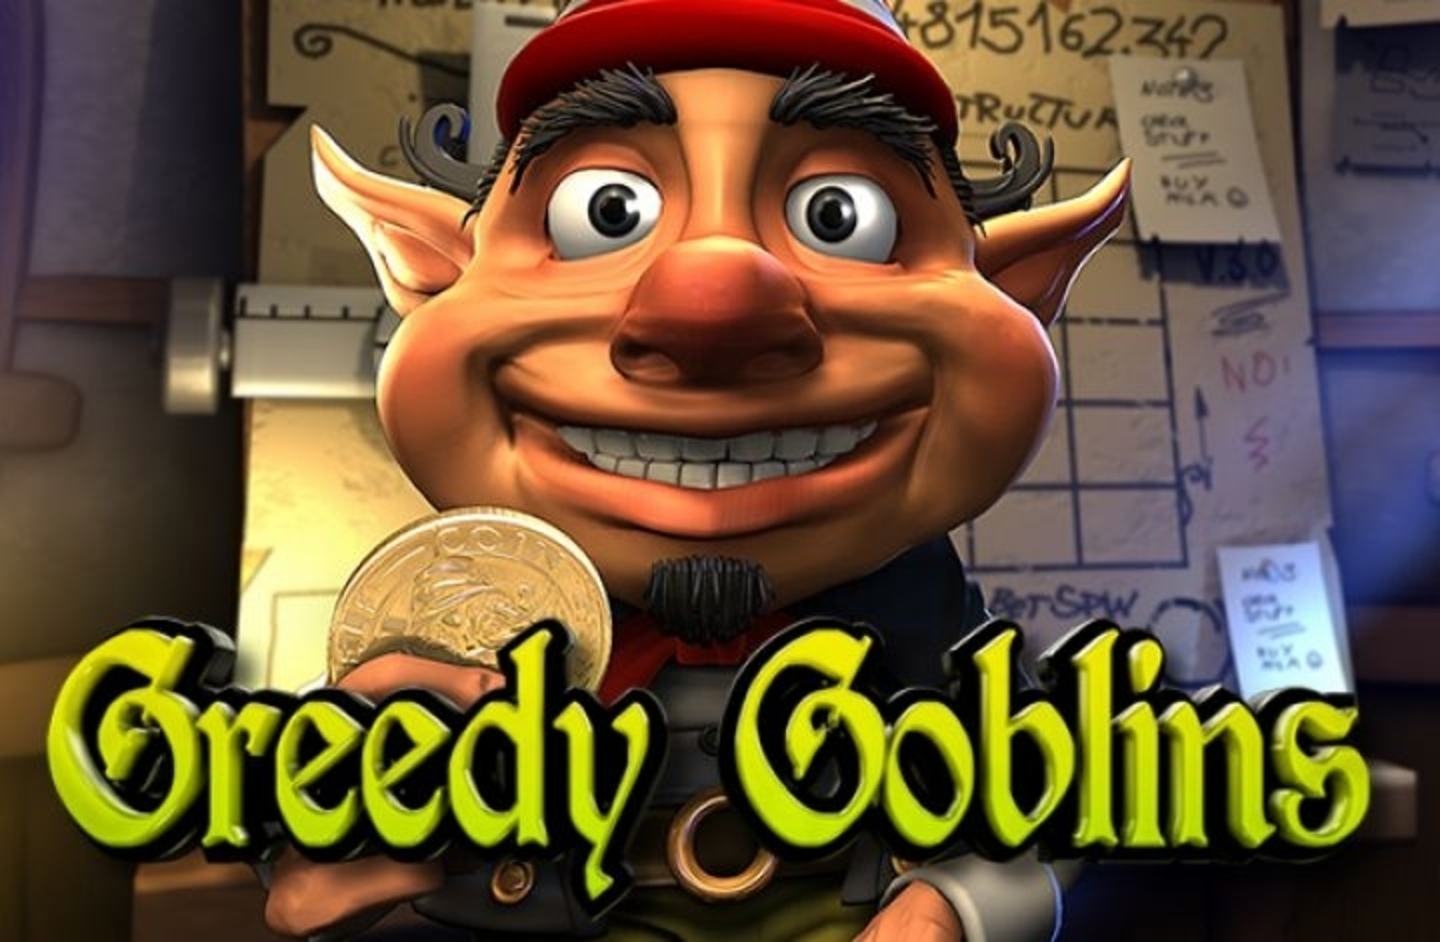 Greedy Goblins demo